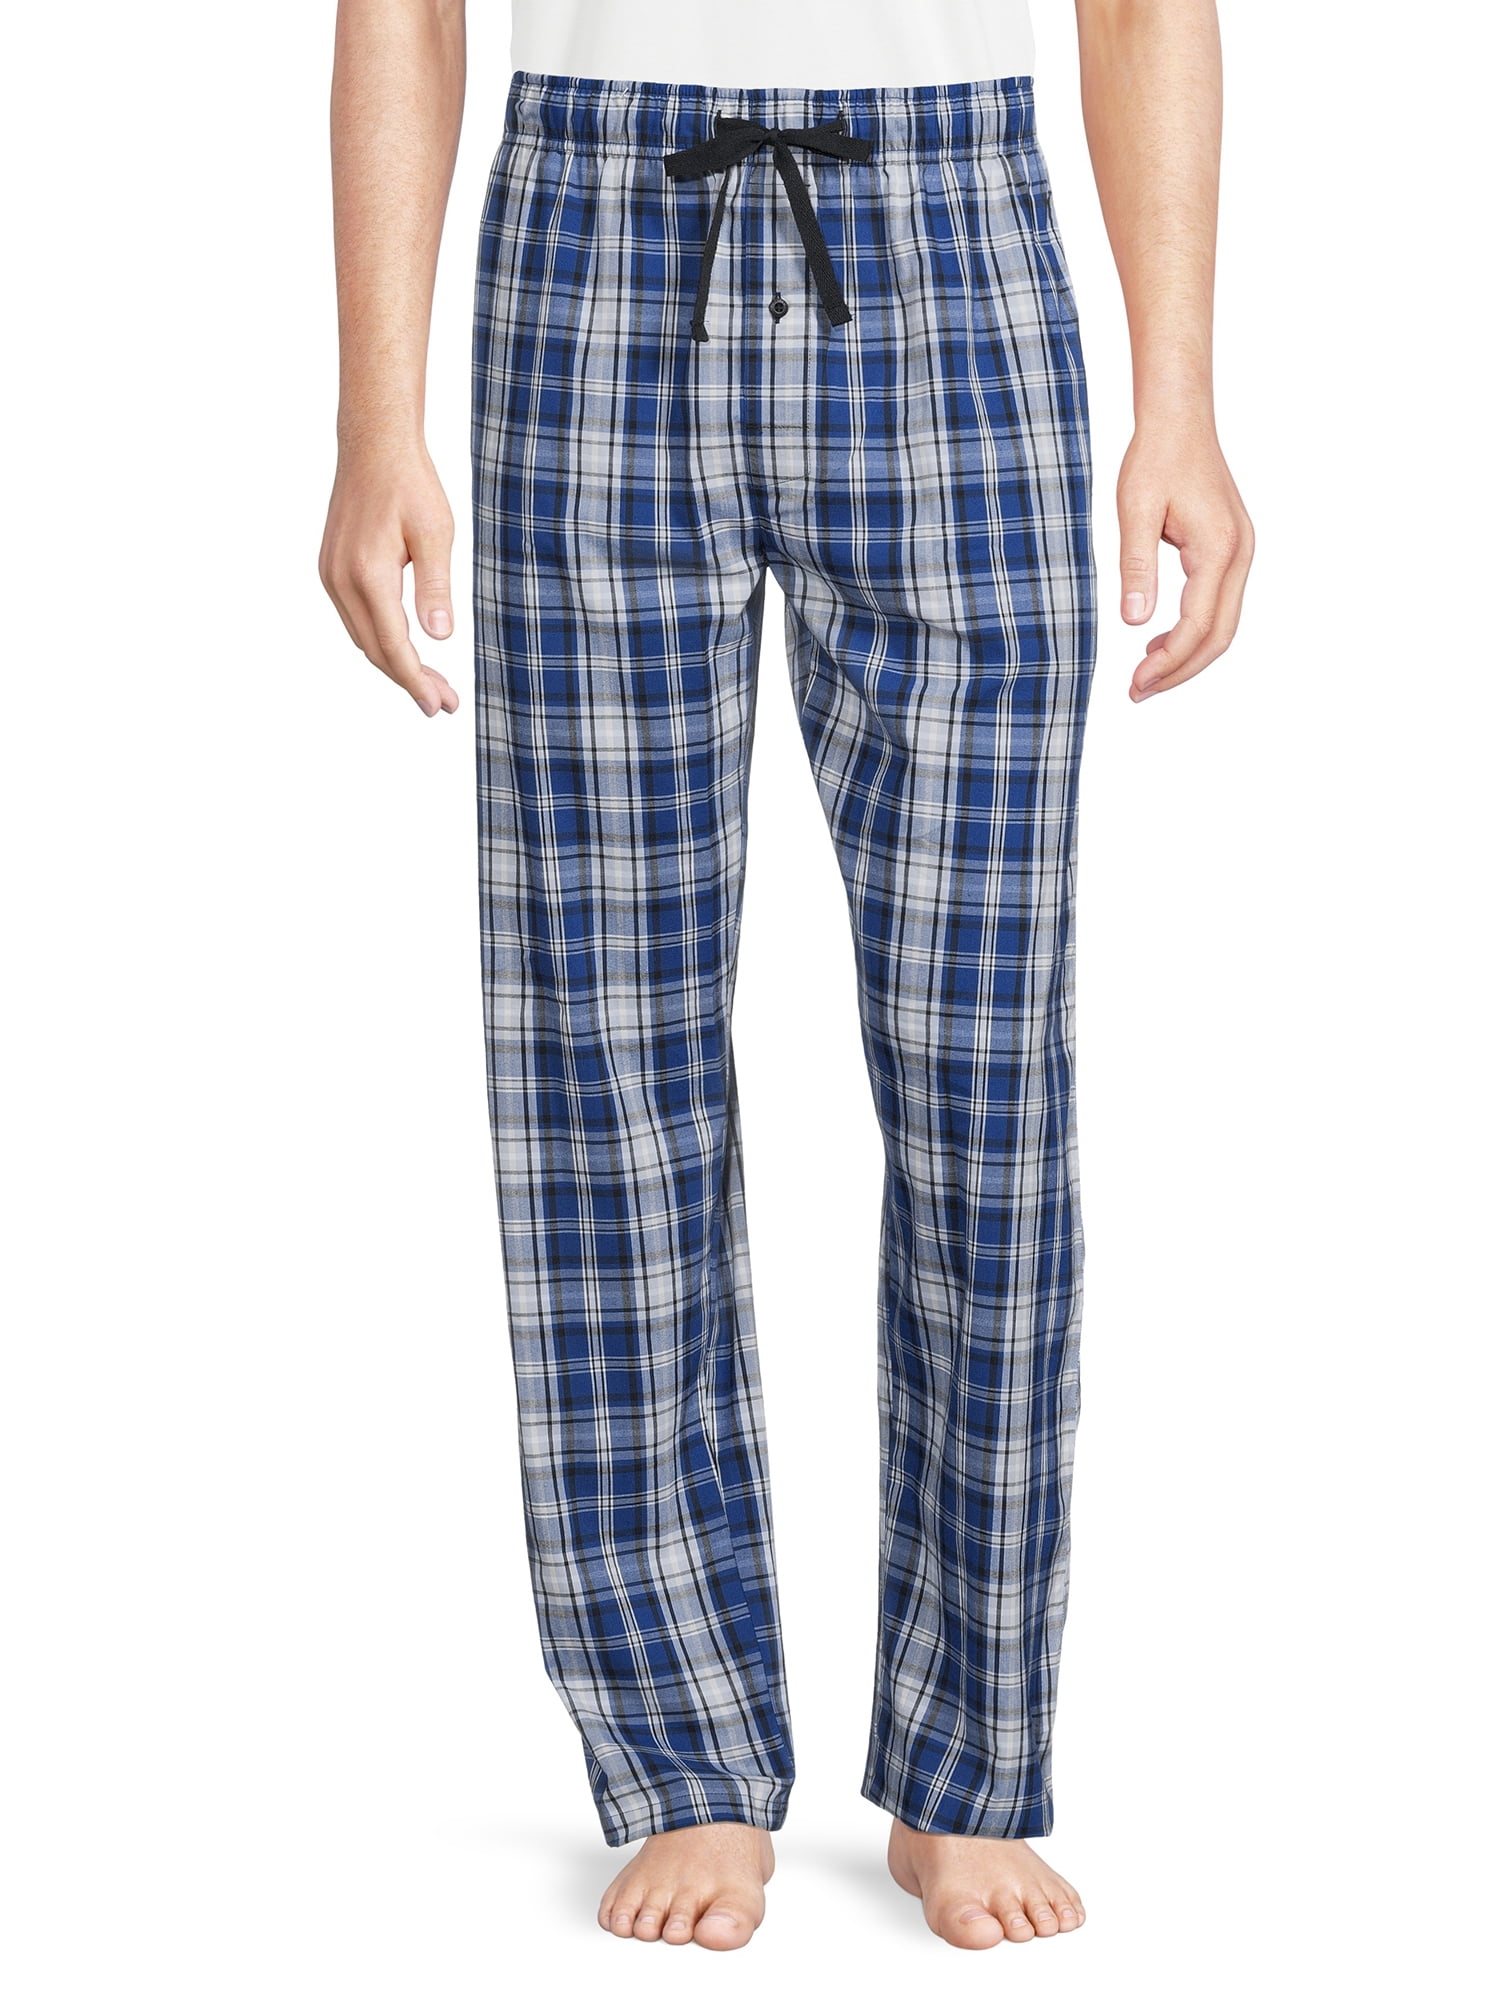 Hanes Men's Short Sleeve Pajama Set w/Woven Knit Pants 3 COLORS S-5XL 